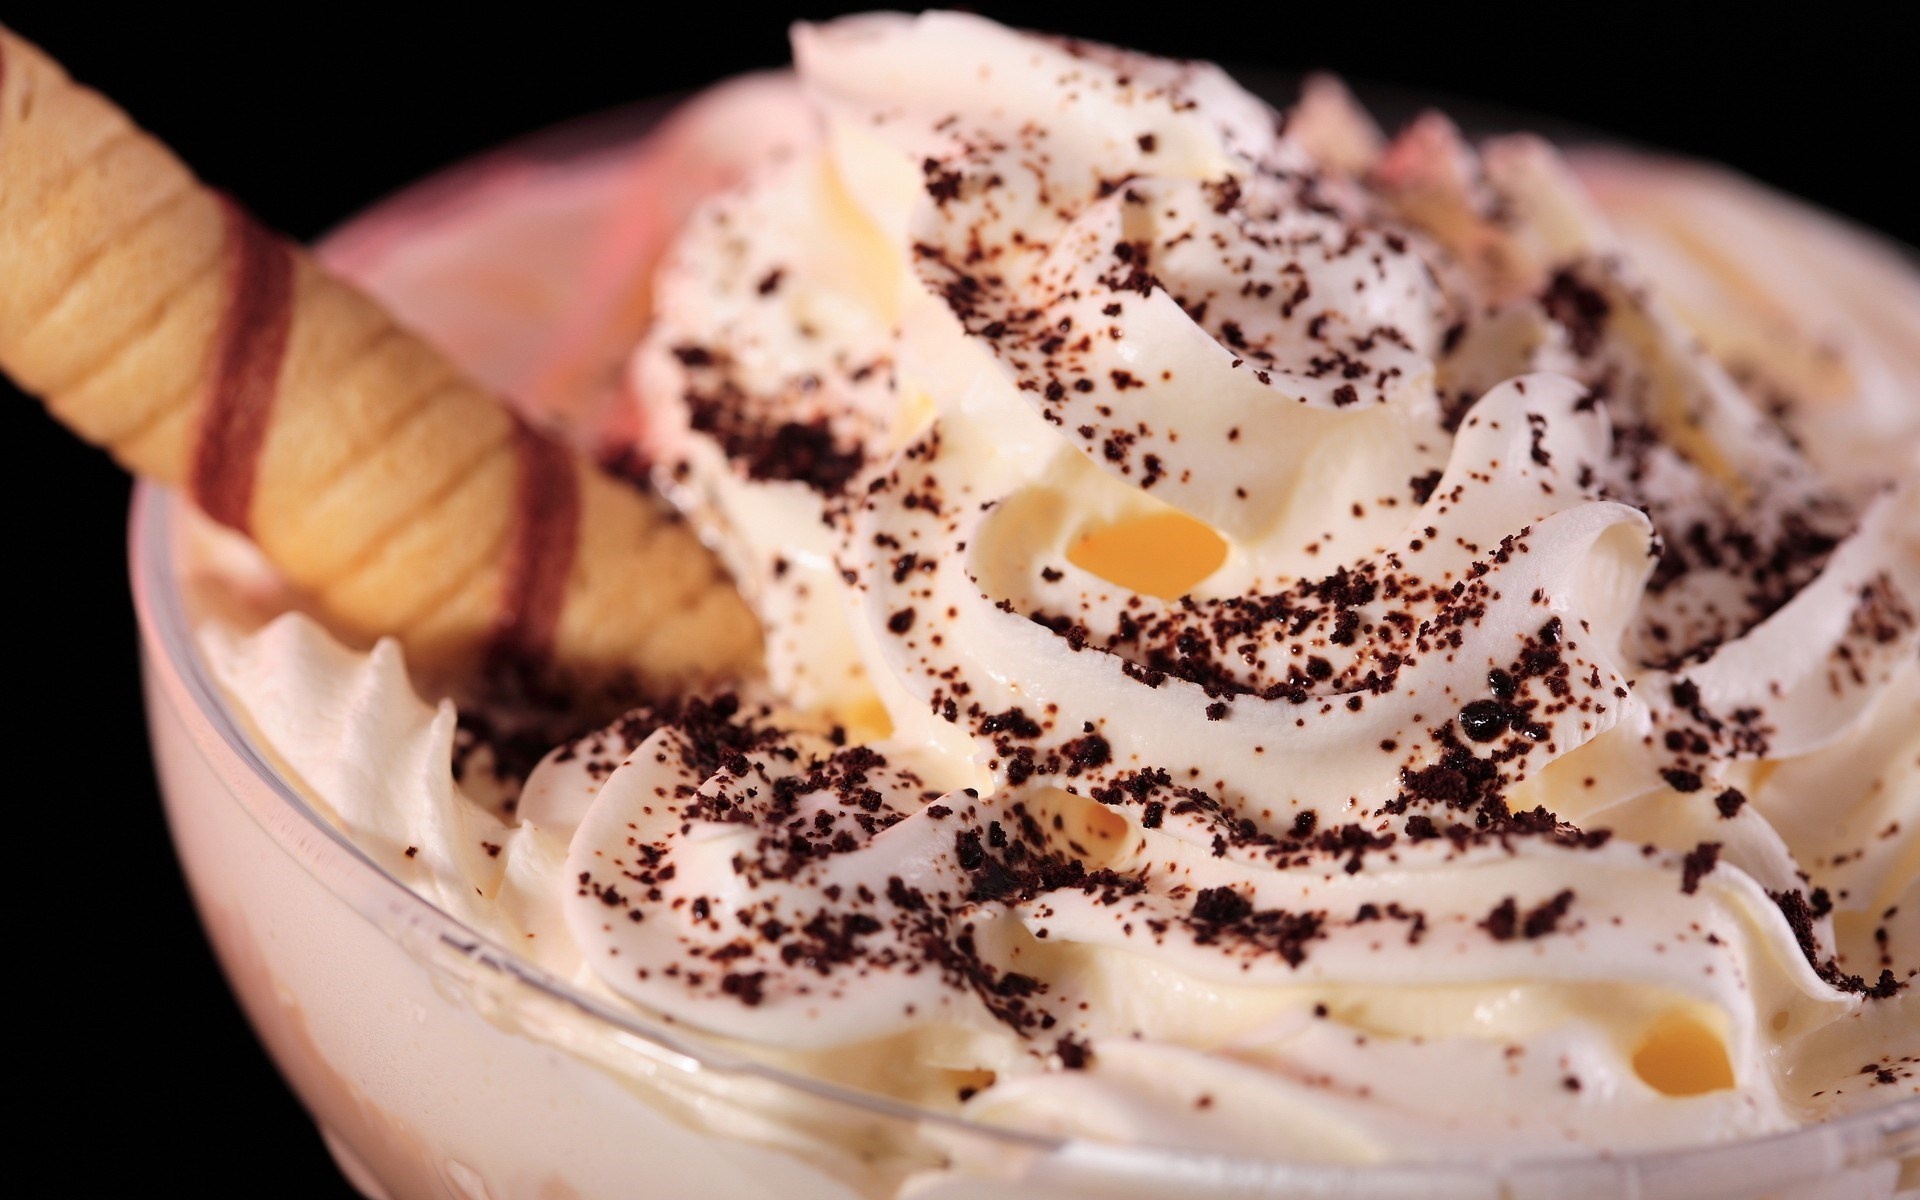 Creamy whipped cream, Tempting treat, Sweet indulgence, Irresistible topping, 1920x1200 HD Desktop